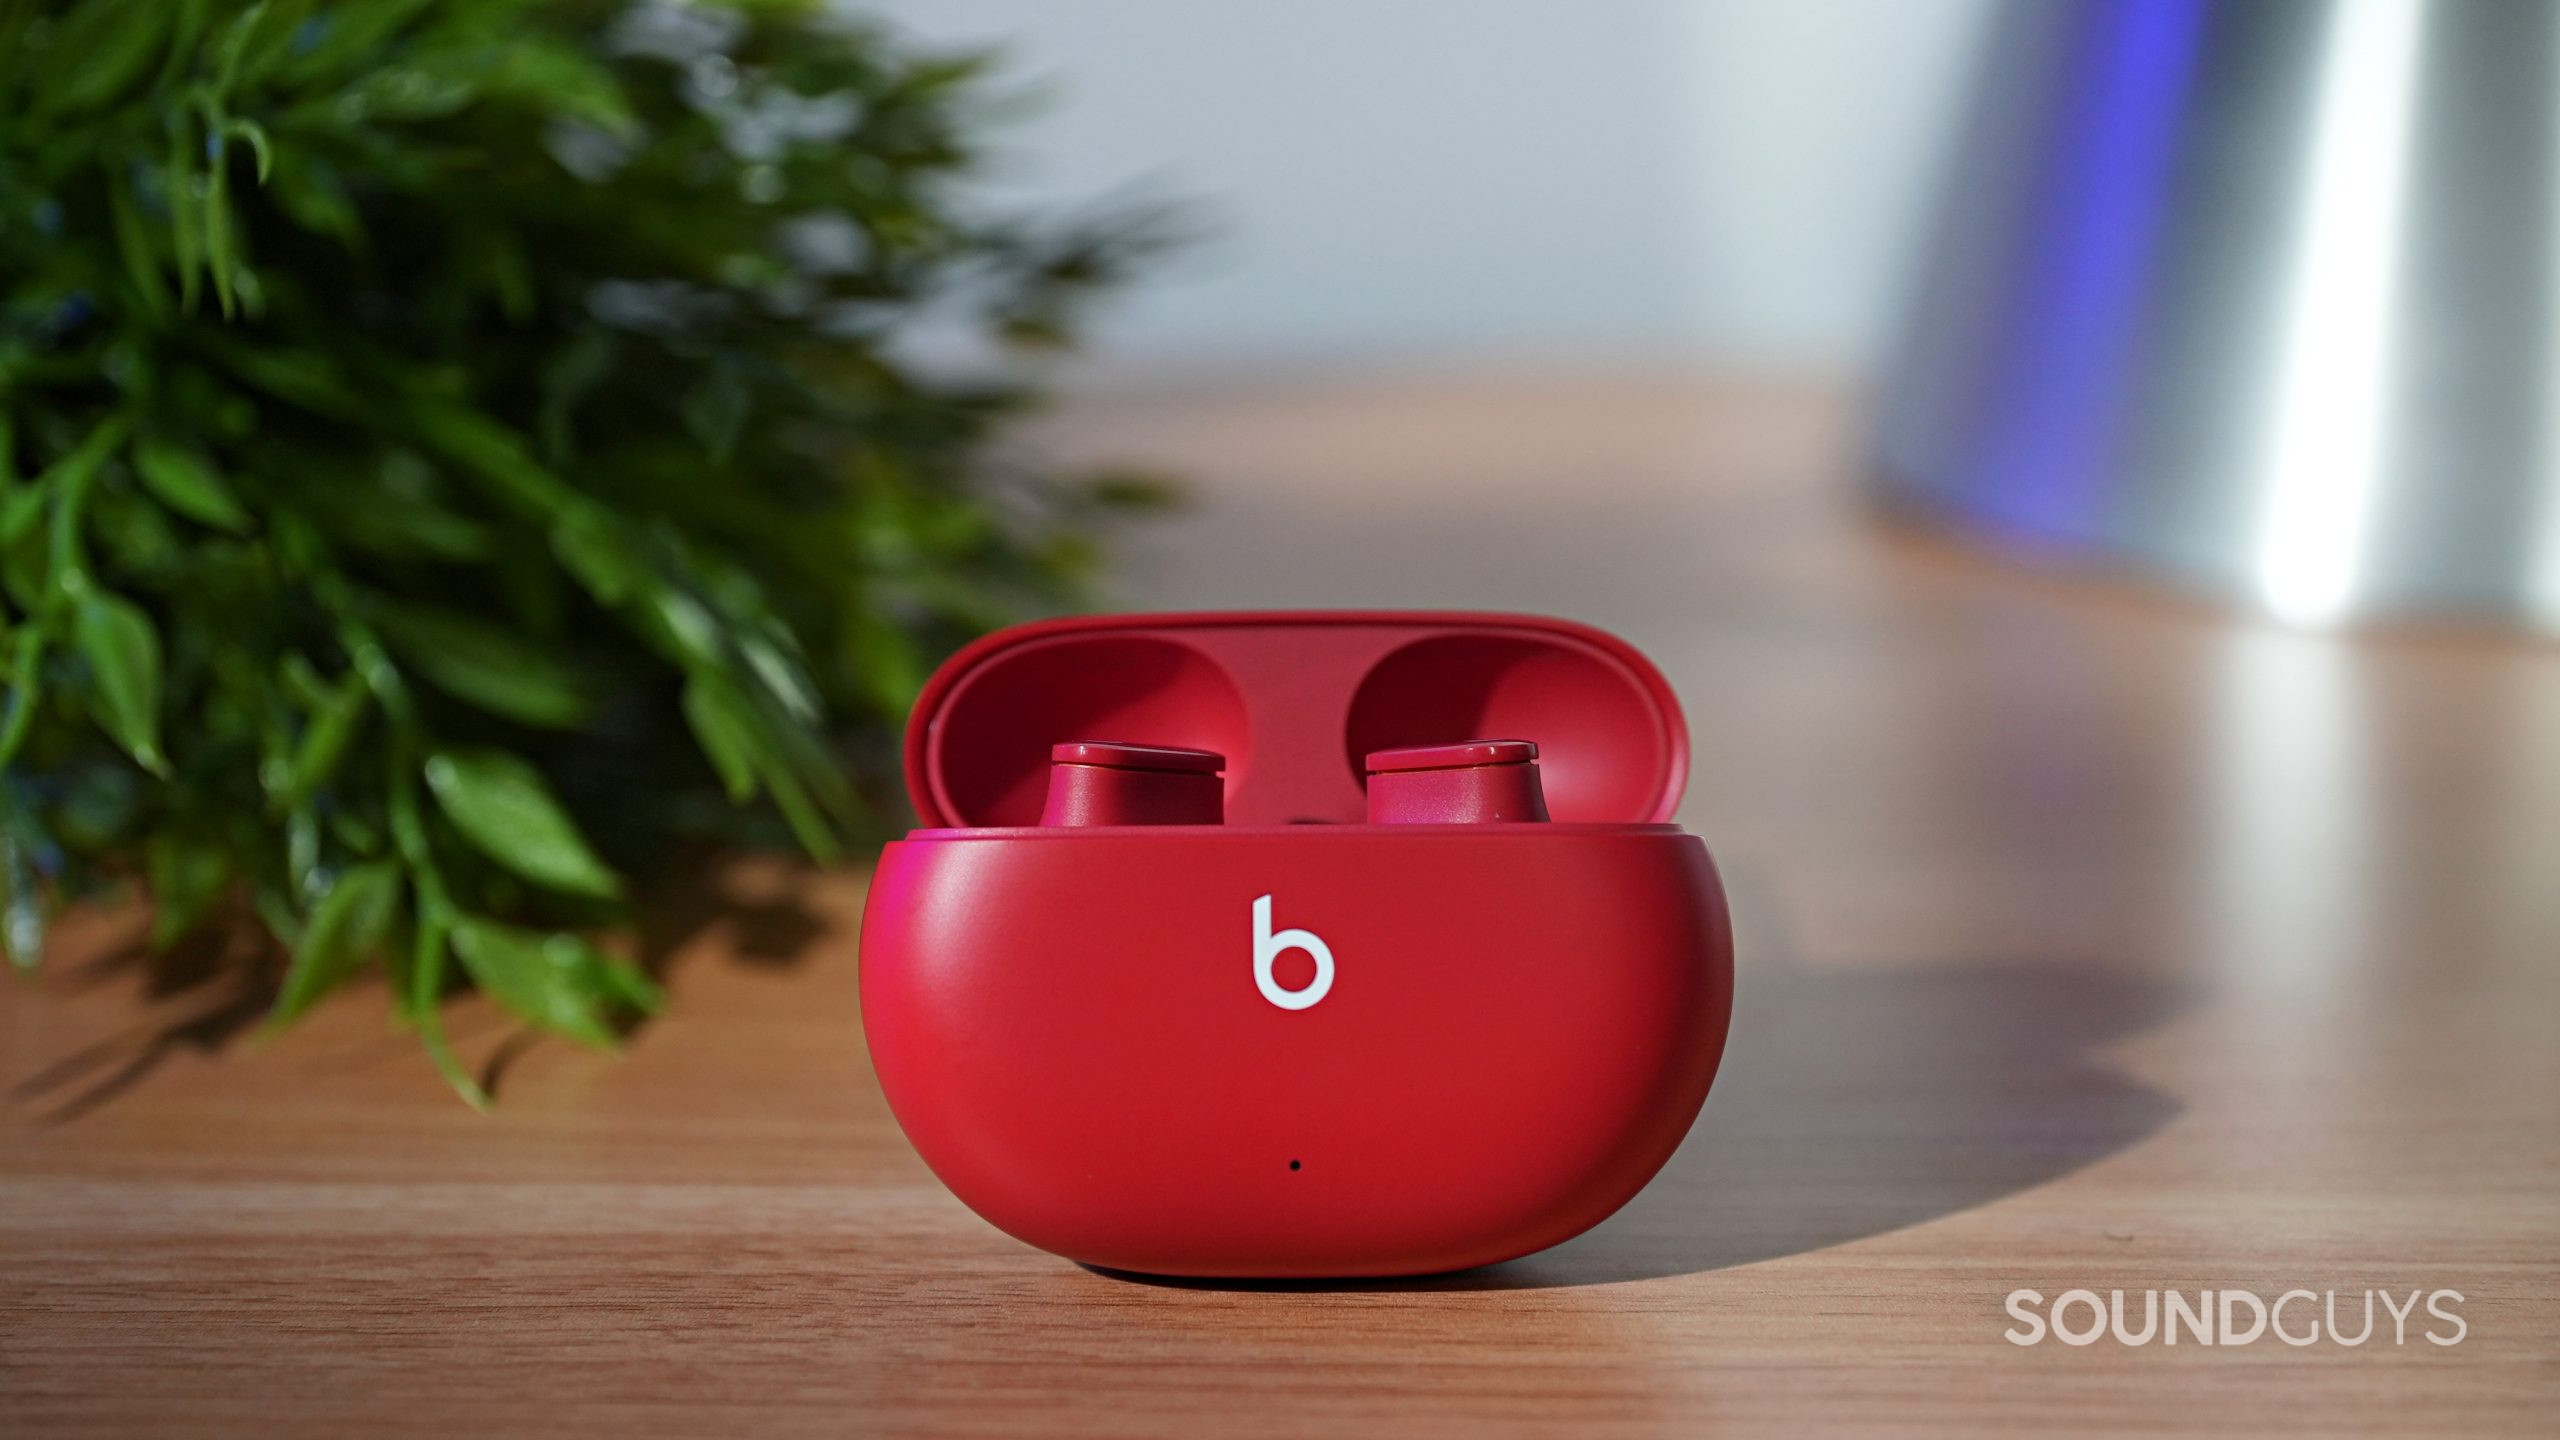 Beats Studio Buds noise canceling true wireless earphones in the open charging case.